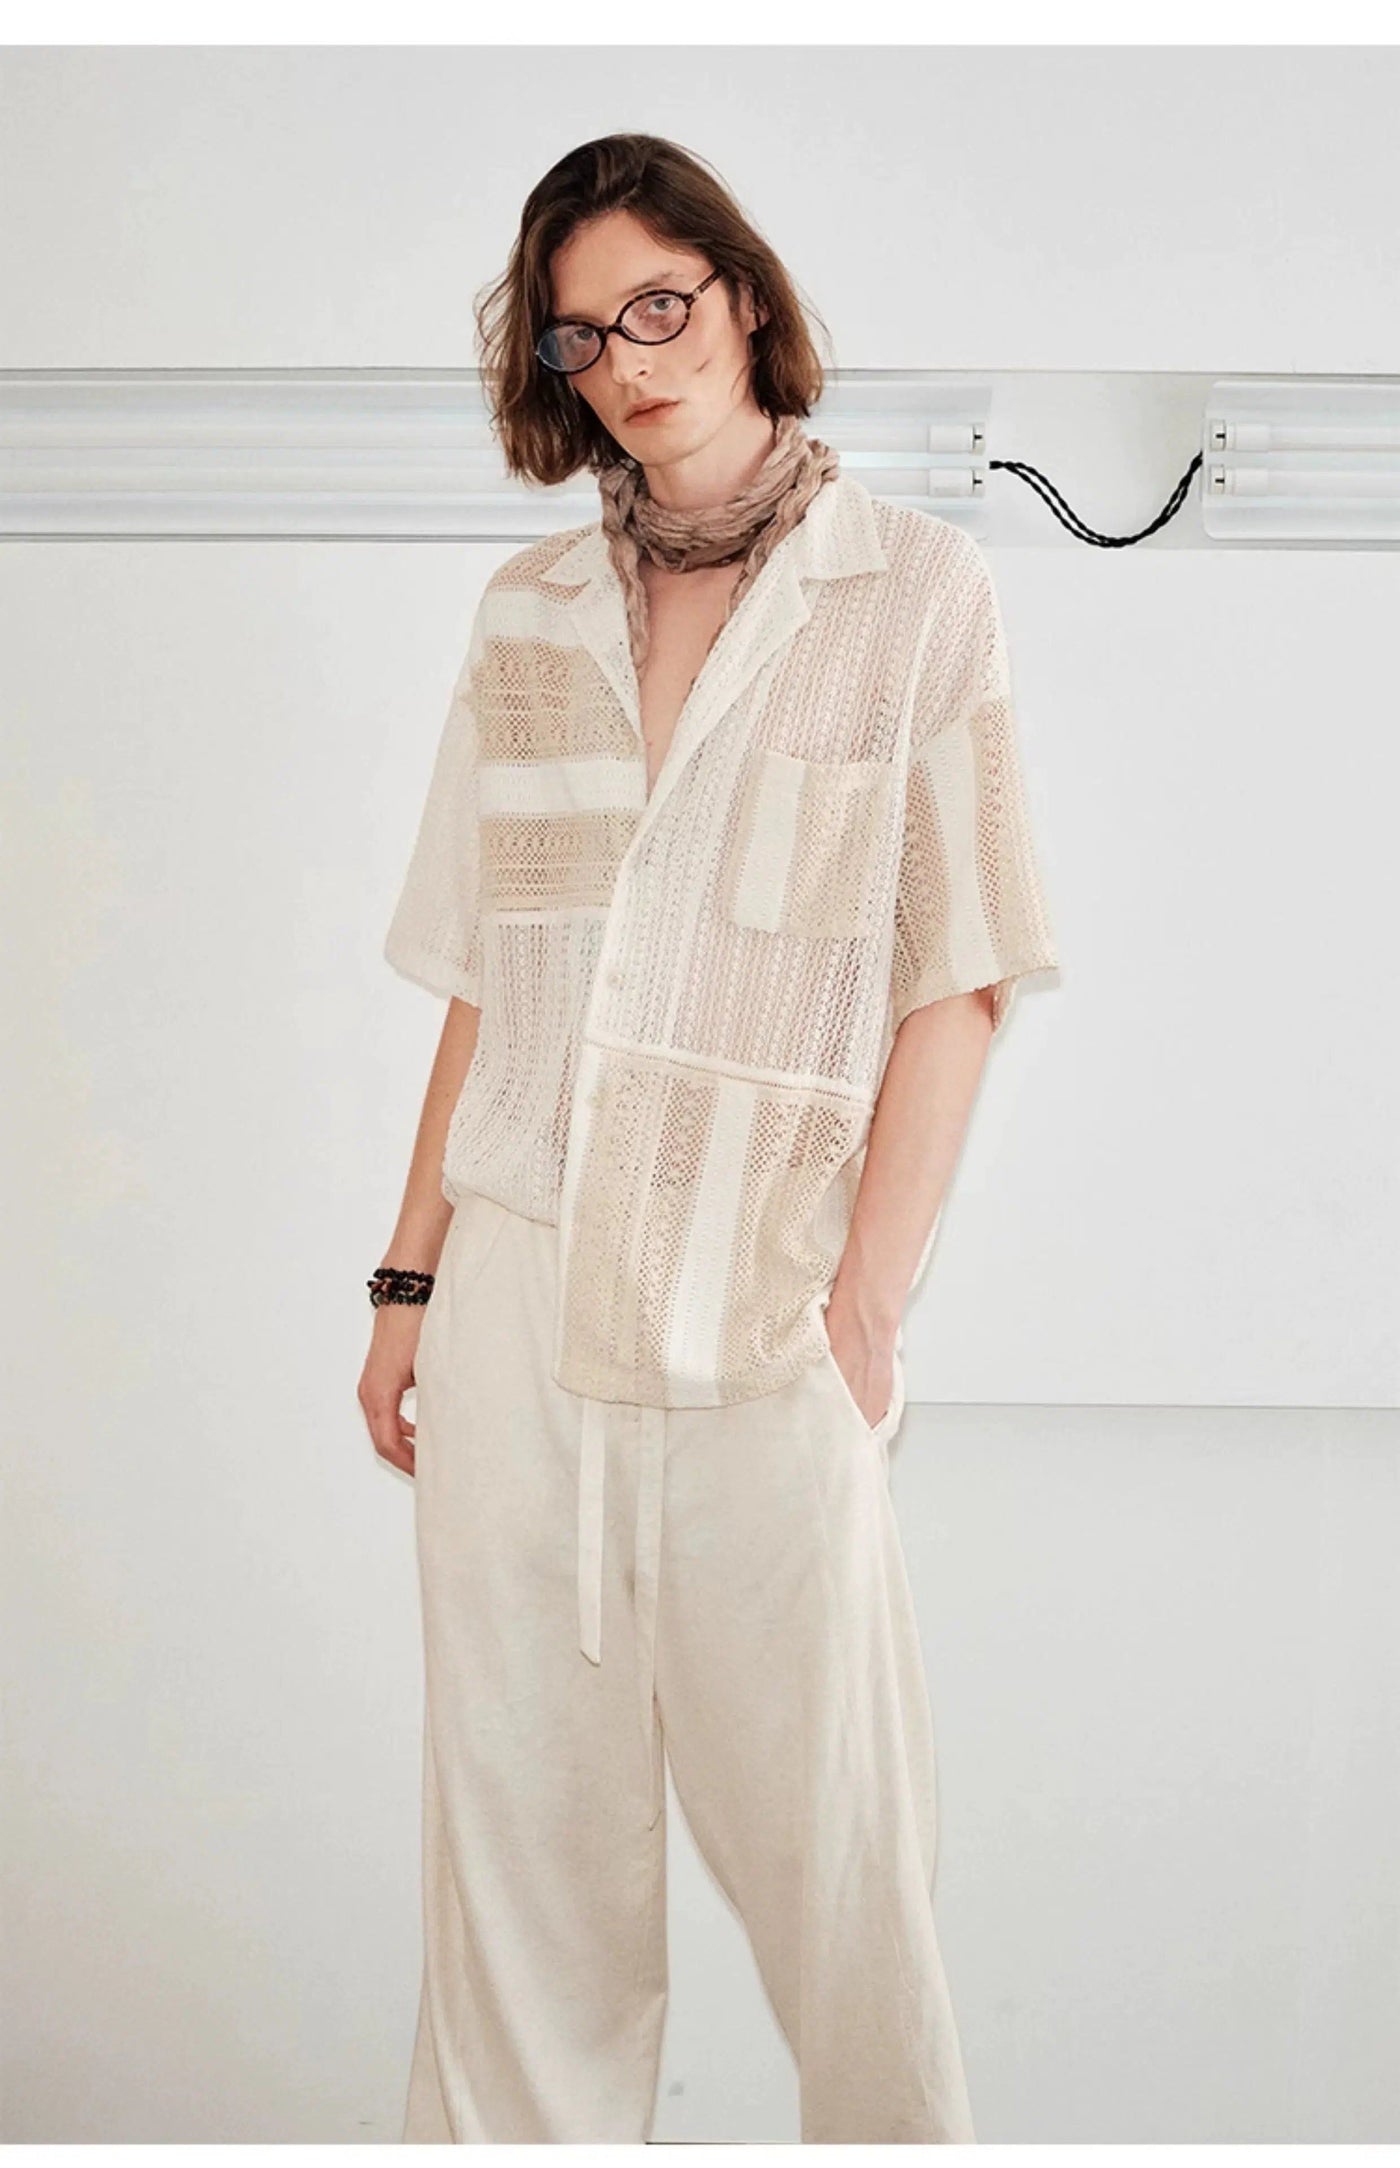 Summer Patterned Mesh Shirt Korean Street Fashion Shirt By Decesolo Shop Online at OH Vault